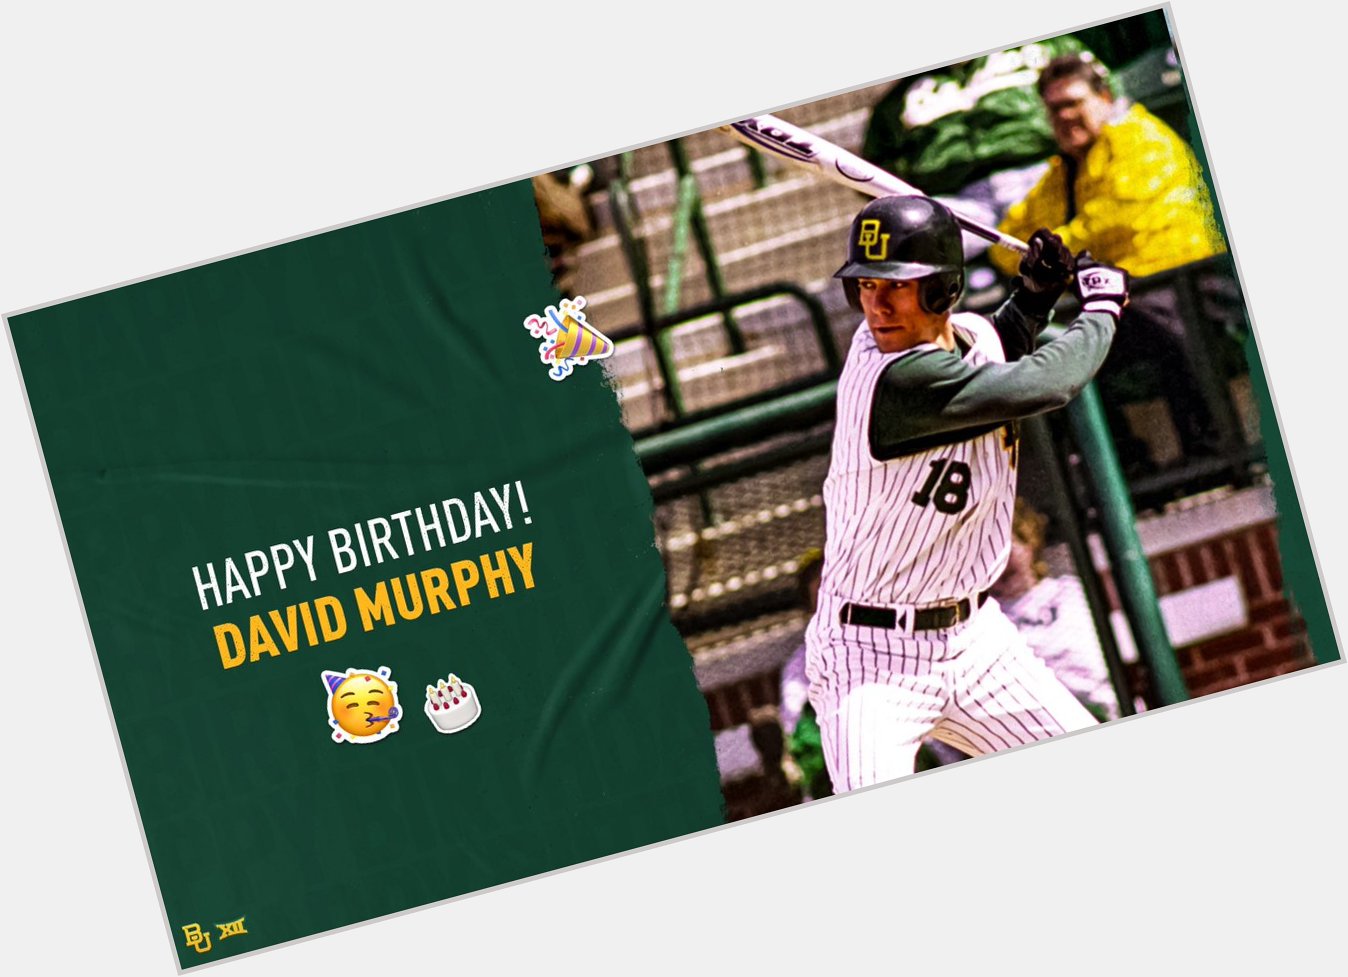 BaylorAthletics: Happy birthday to alum and 2003 MLB Draft pick, David Murphy!  